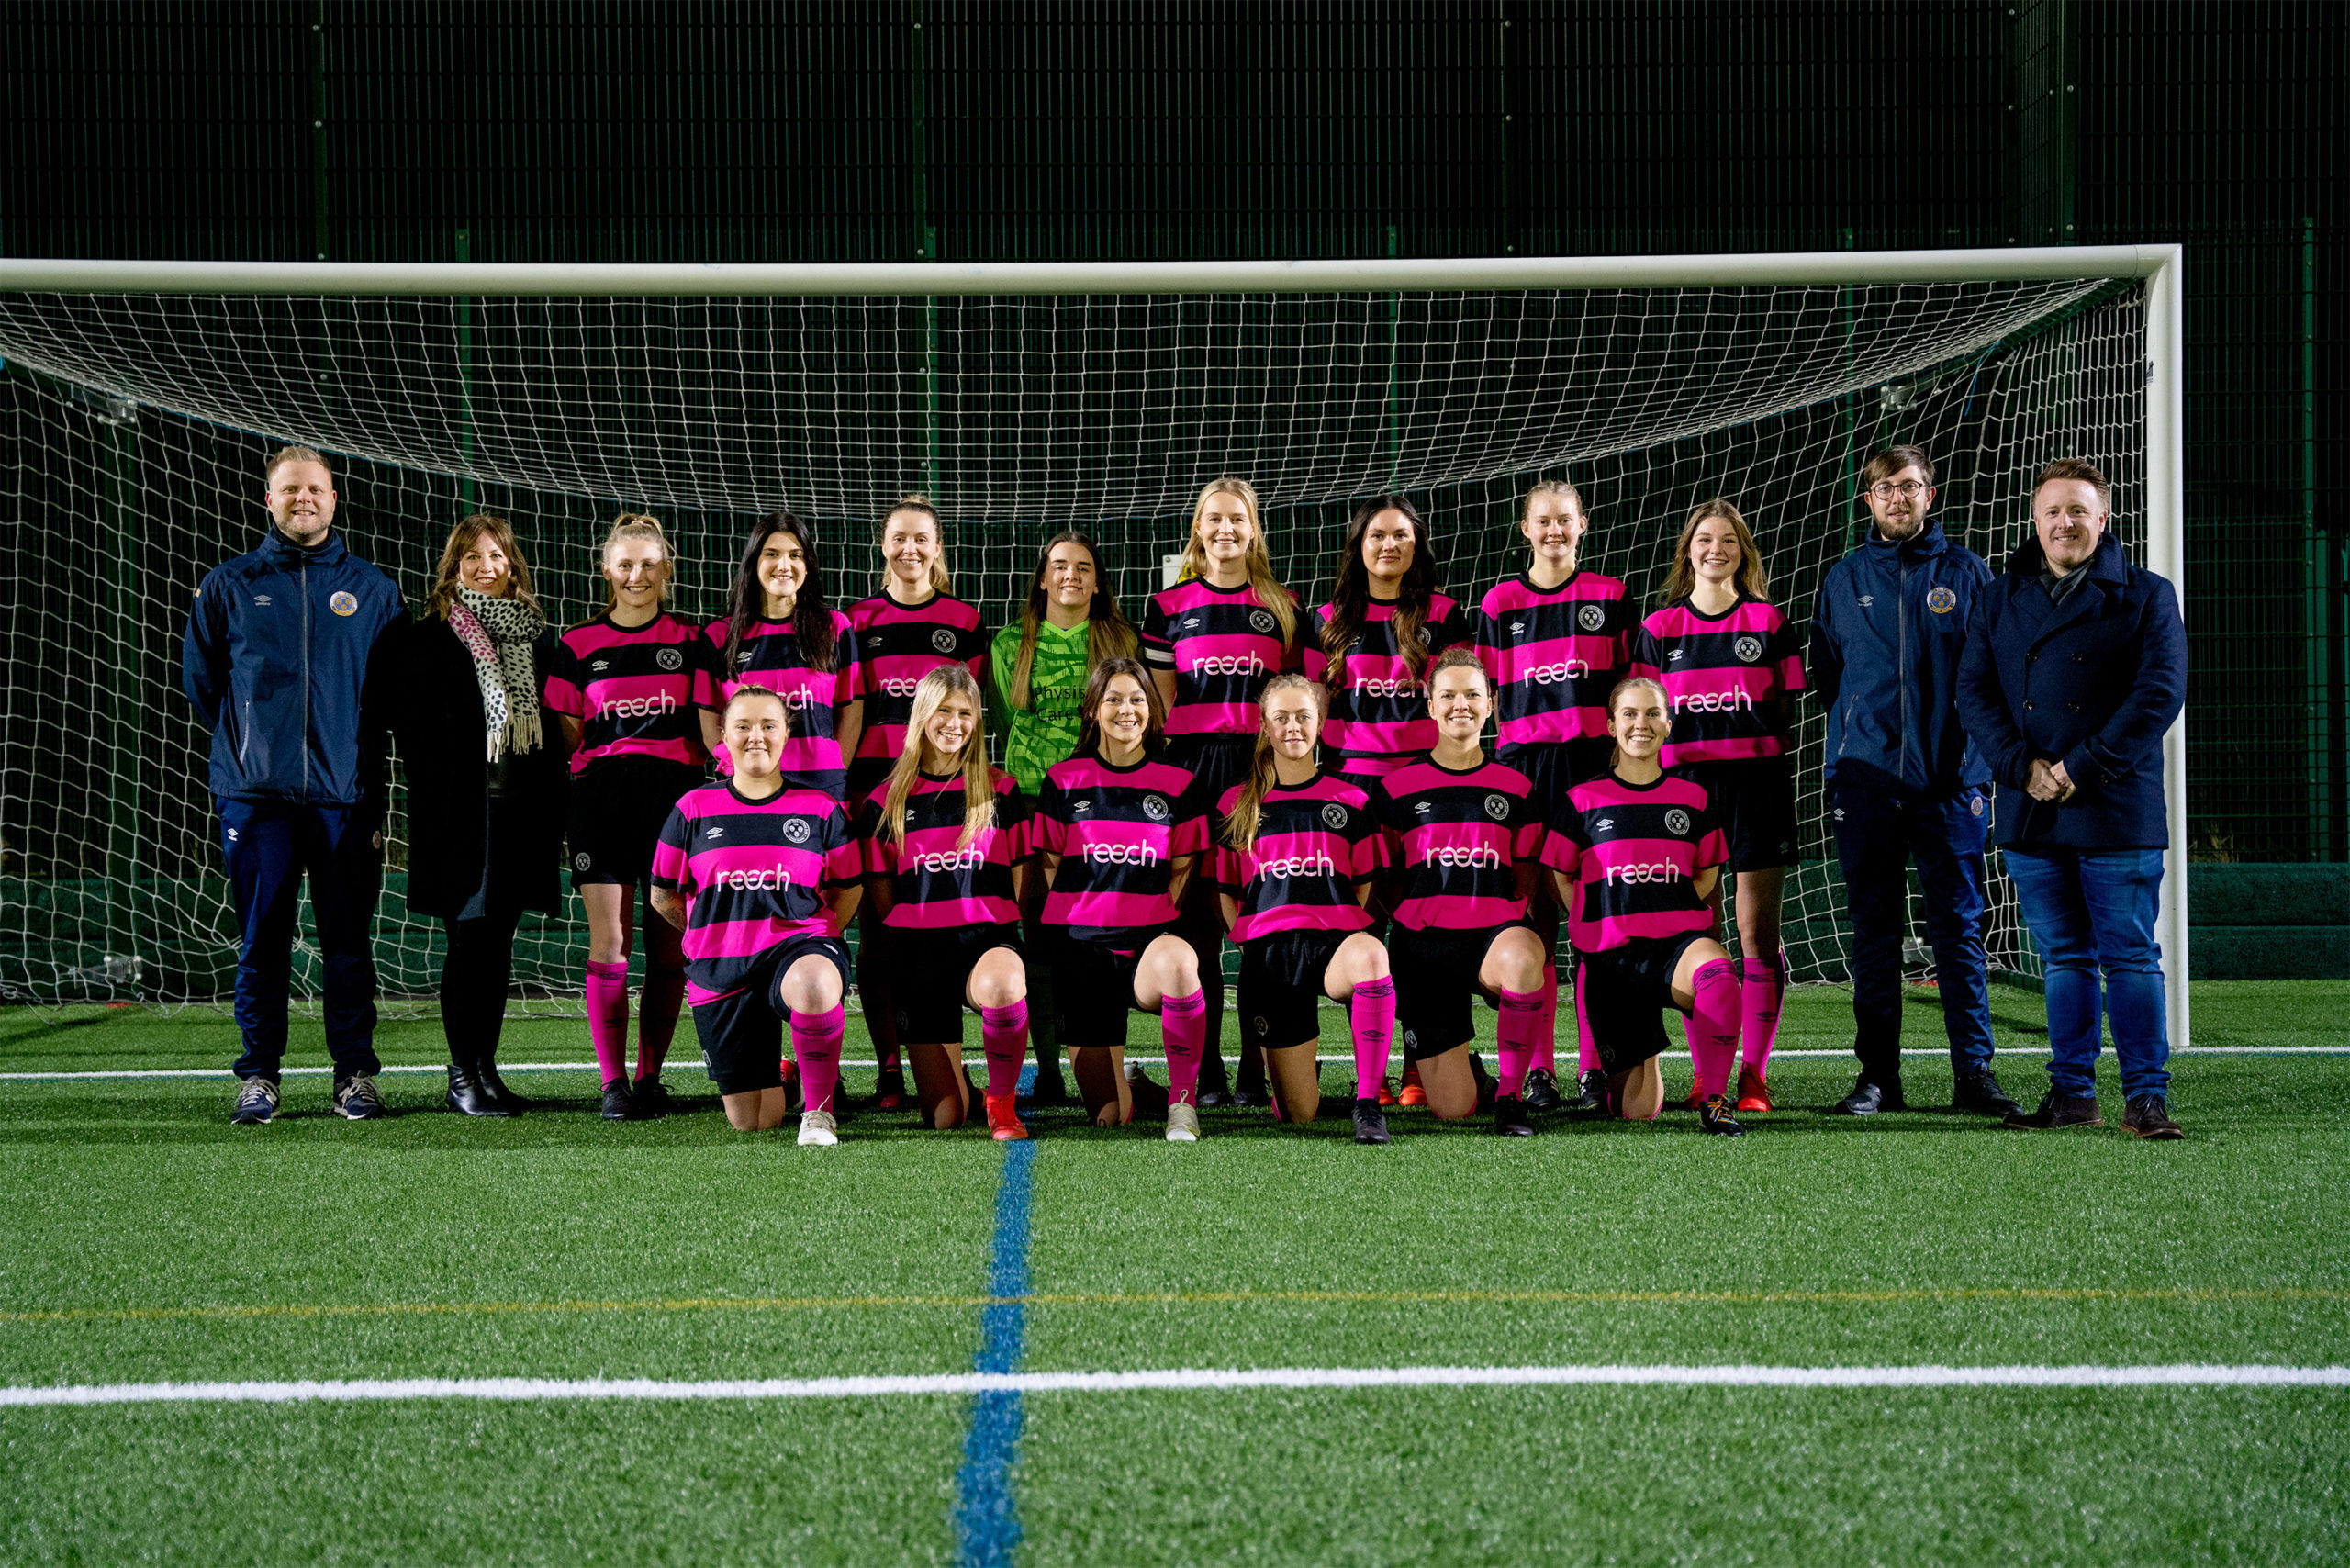 We’re official sponsor of Shrewsbury Town FC Women’s away kit